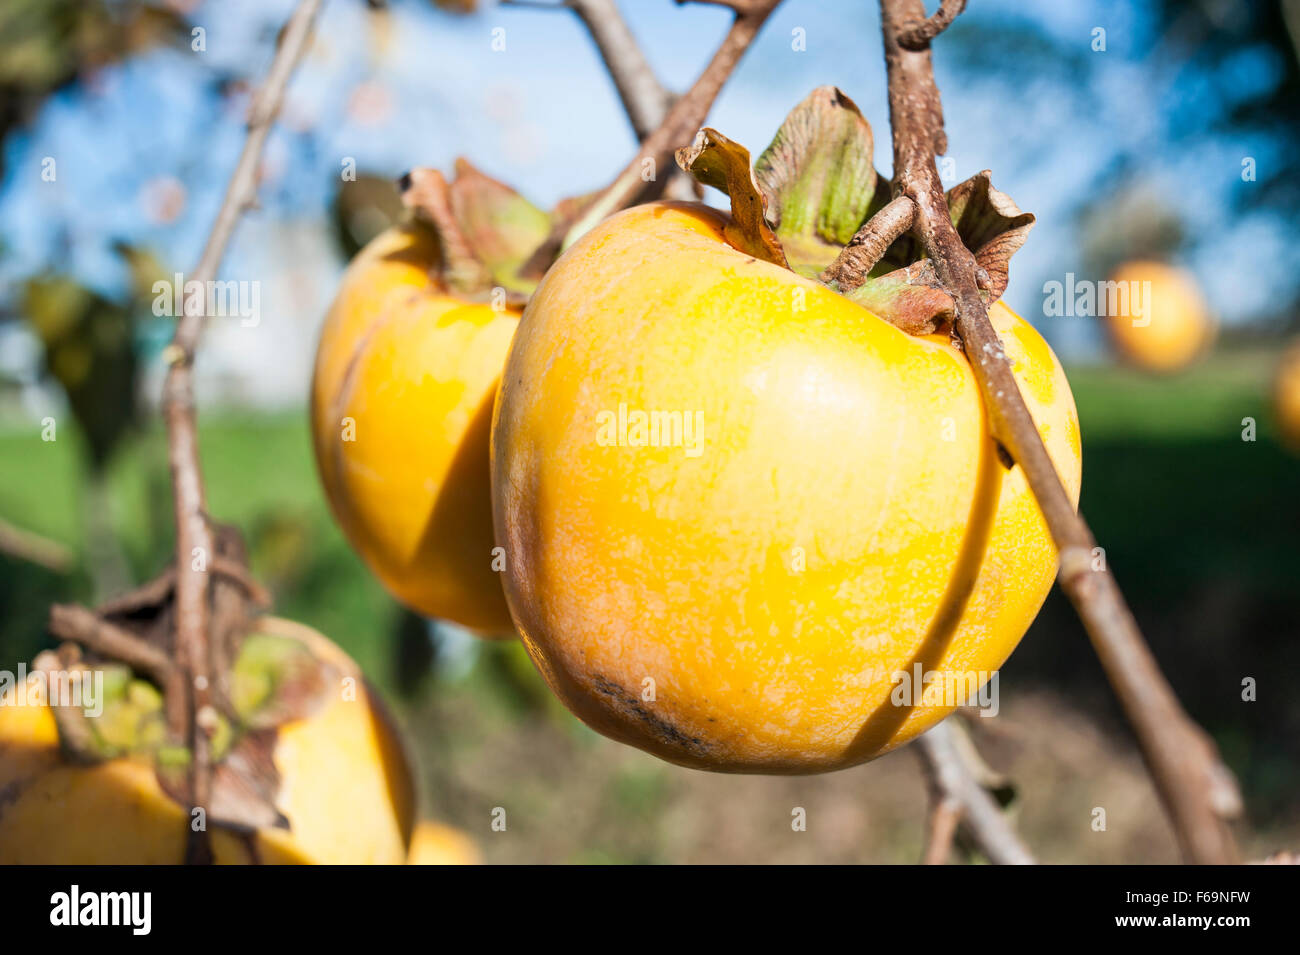 Fall season: ripe persimmon fruit on the tree Stock Photo